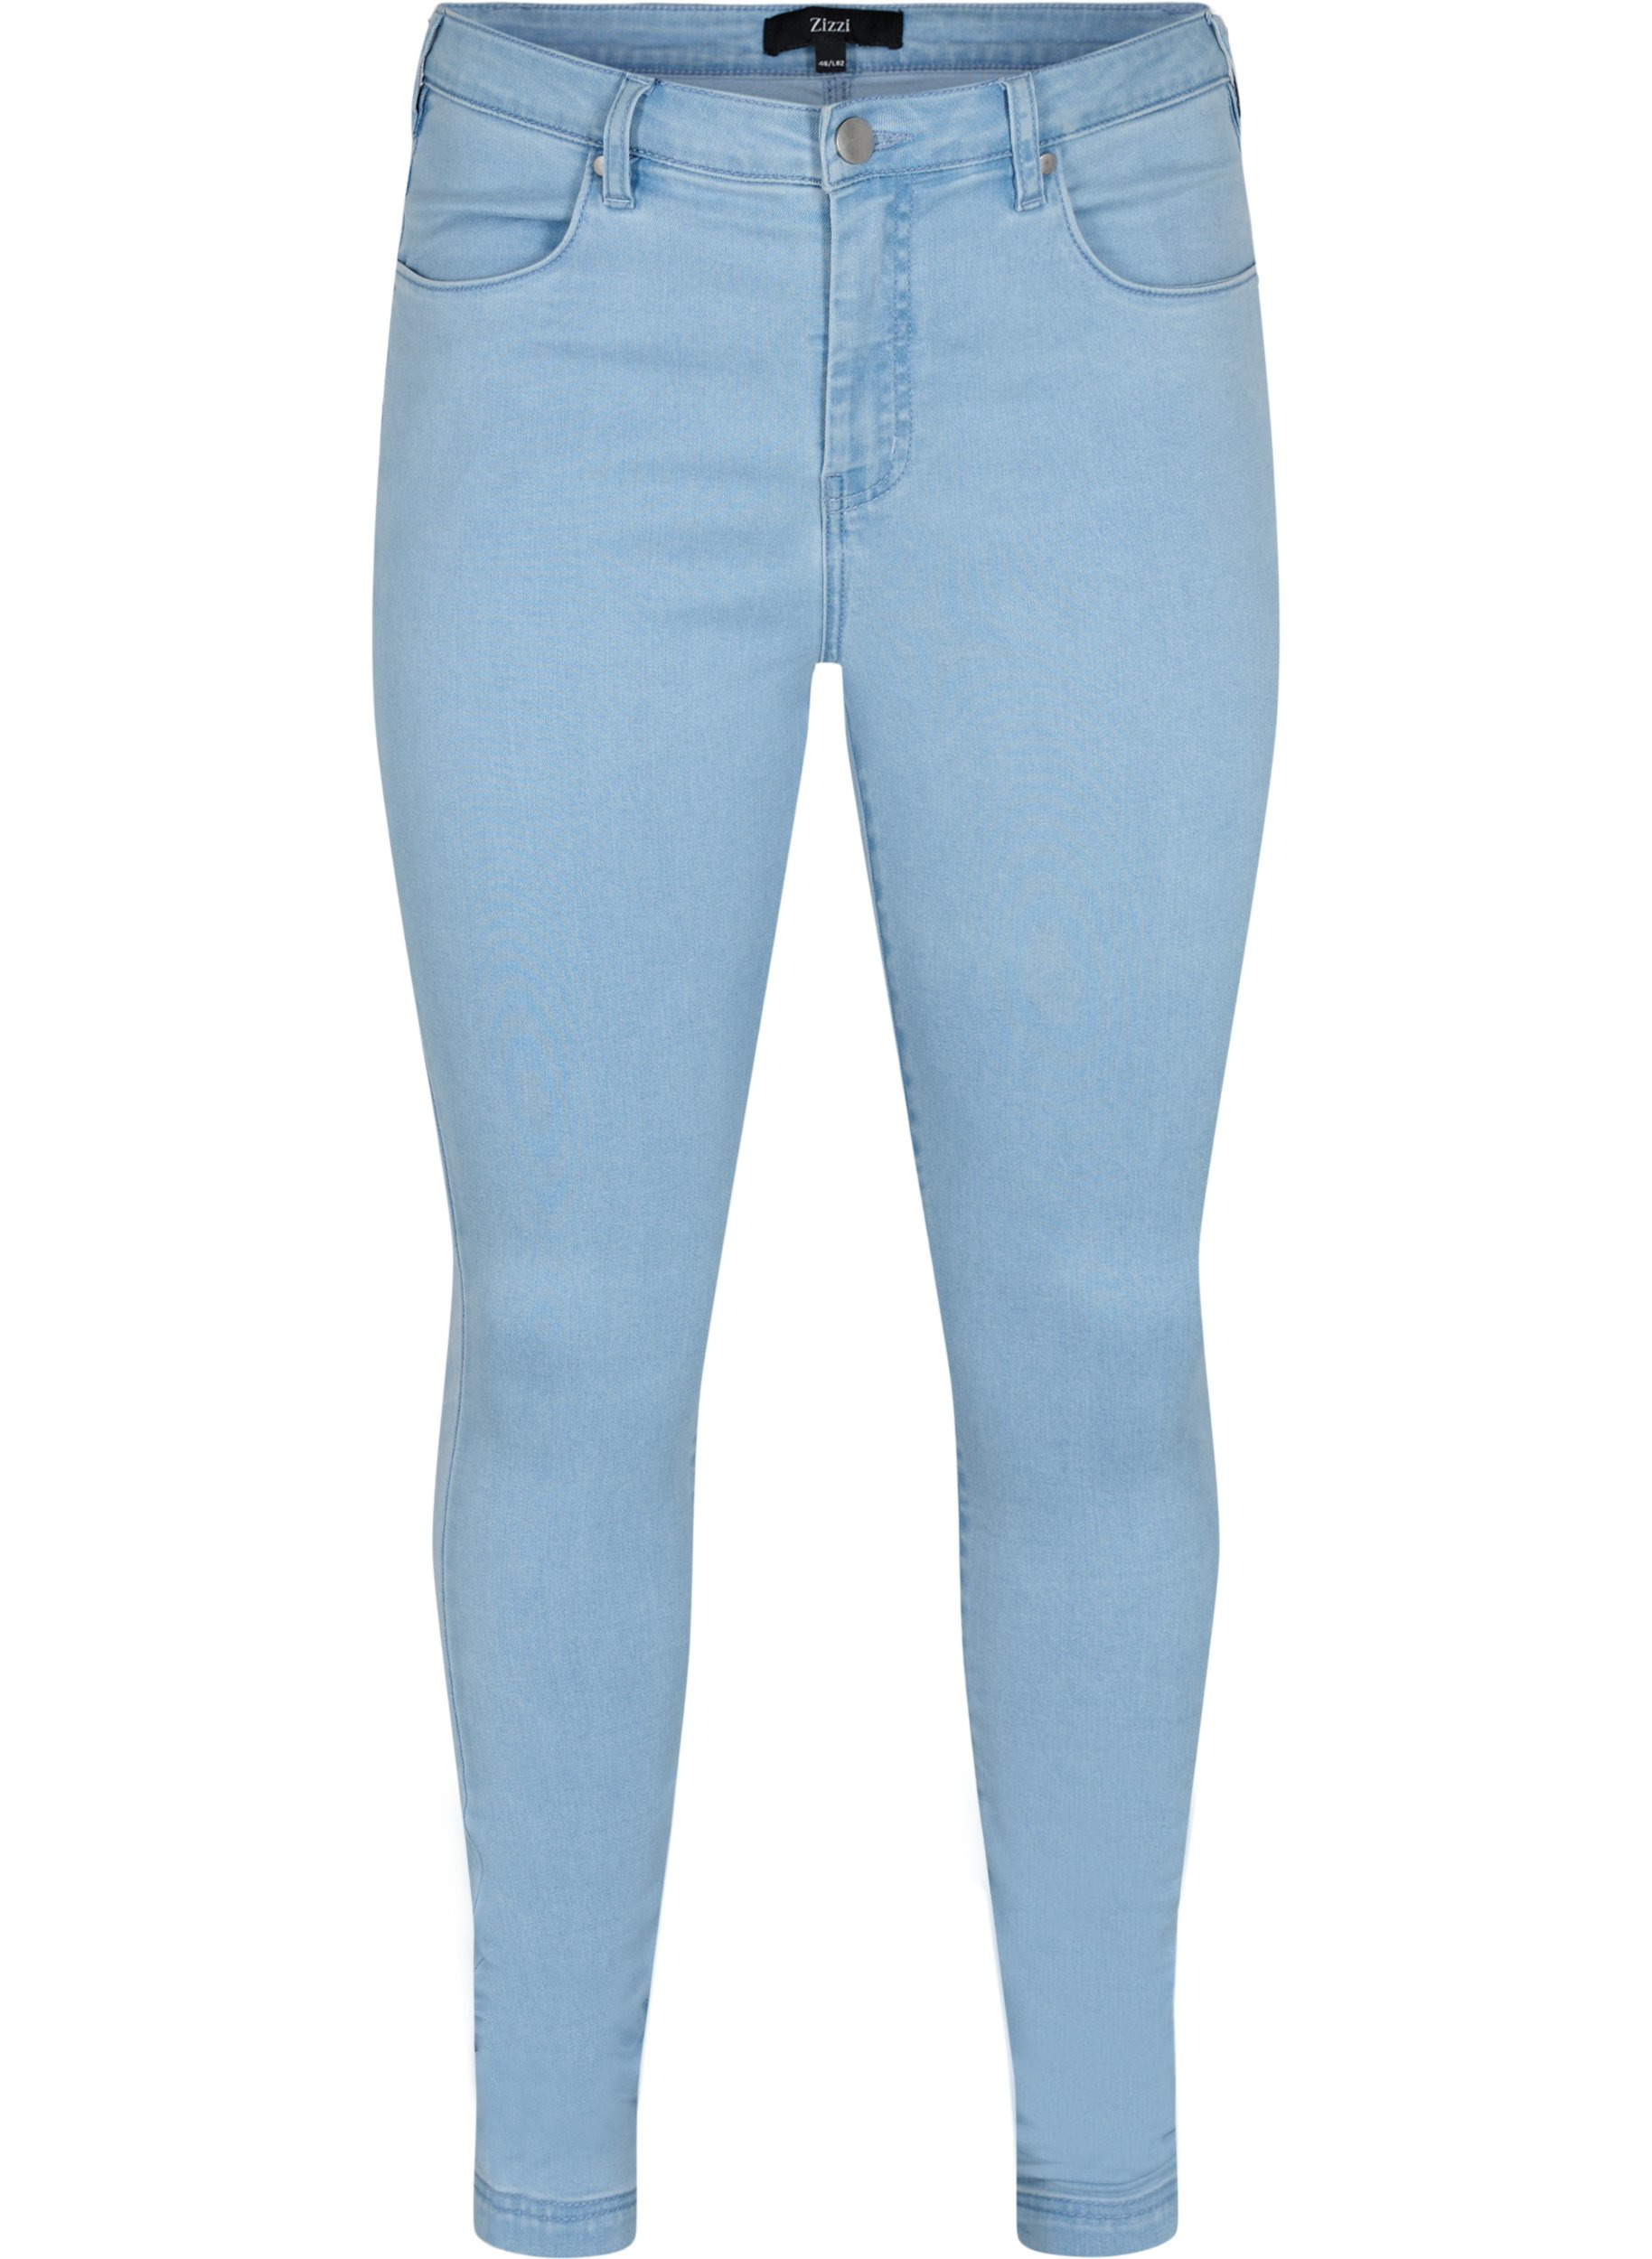 Super slim Amy jeans with high waist, Ex Lt Blue